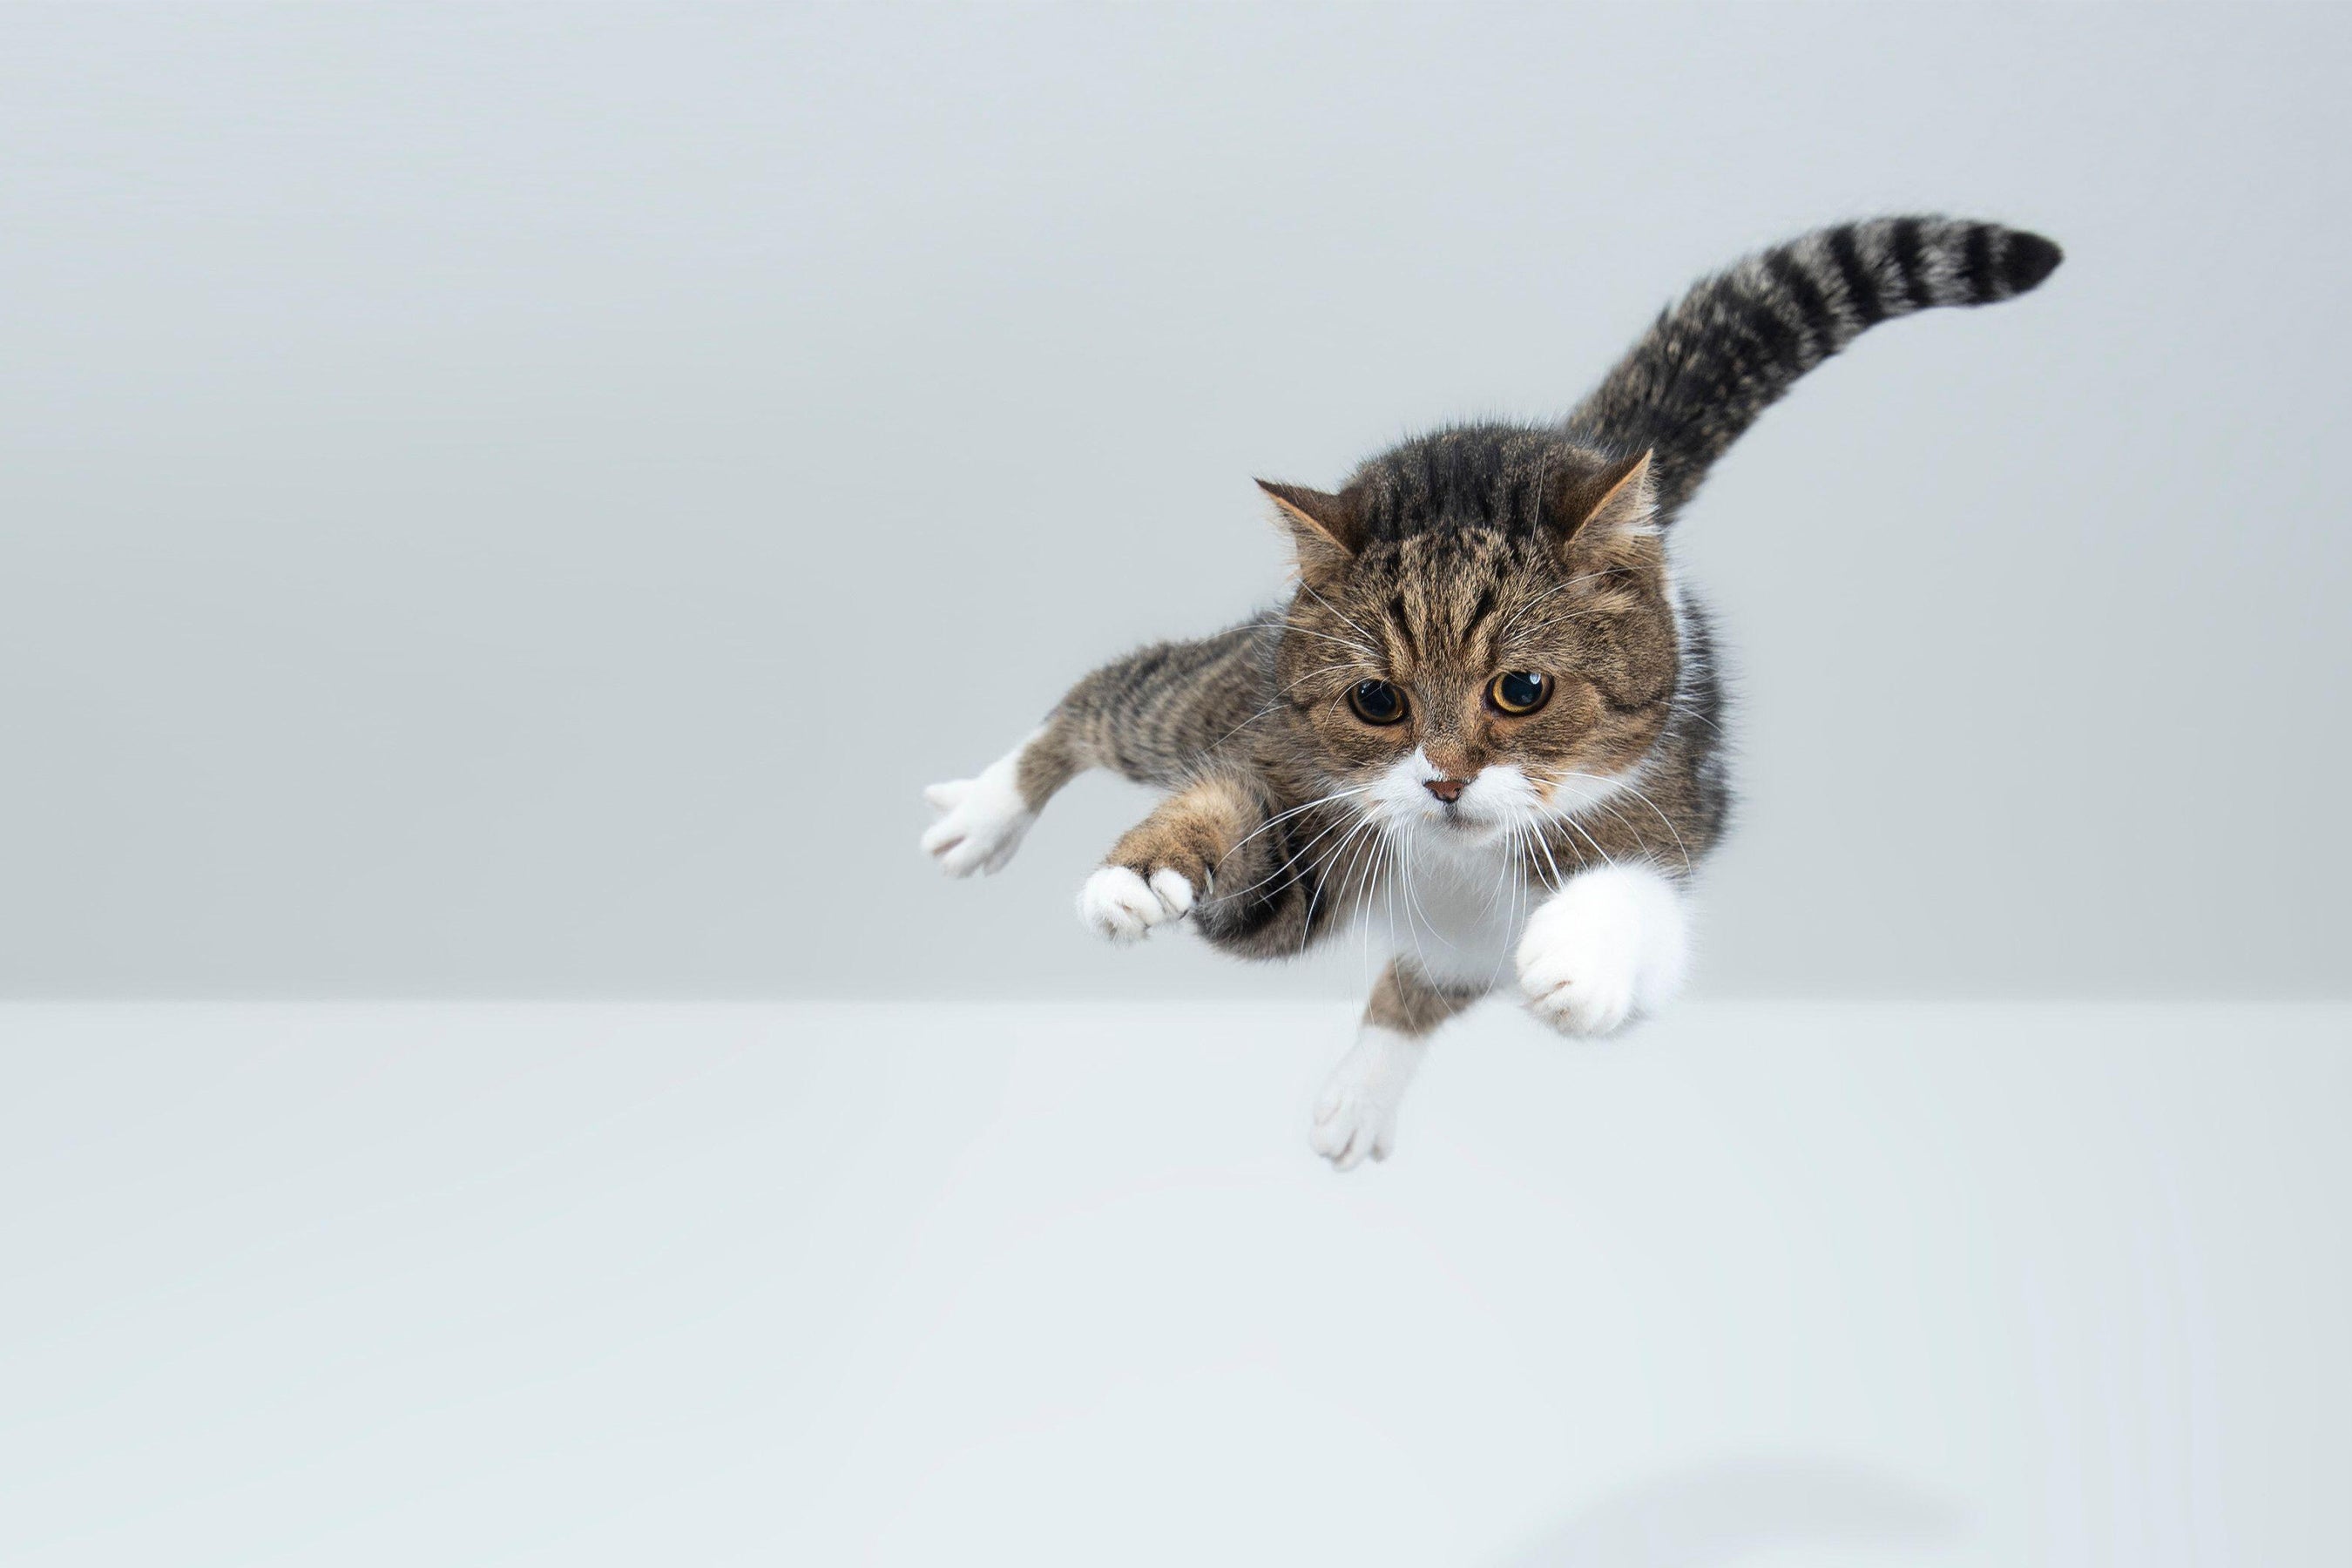 Why Do Cats Land on Their Feet? Physics Explains